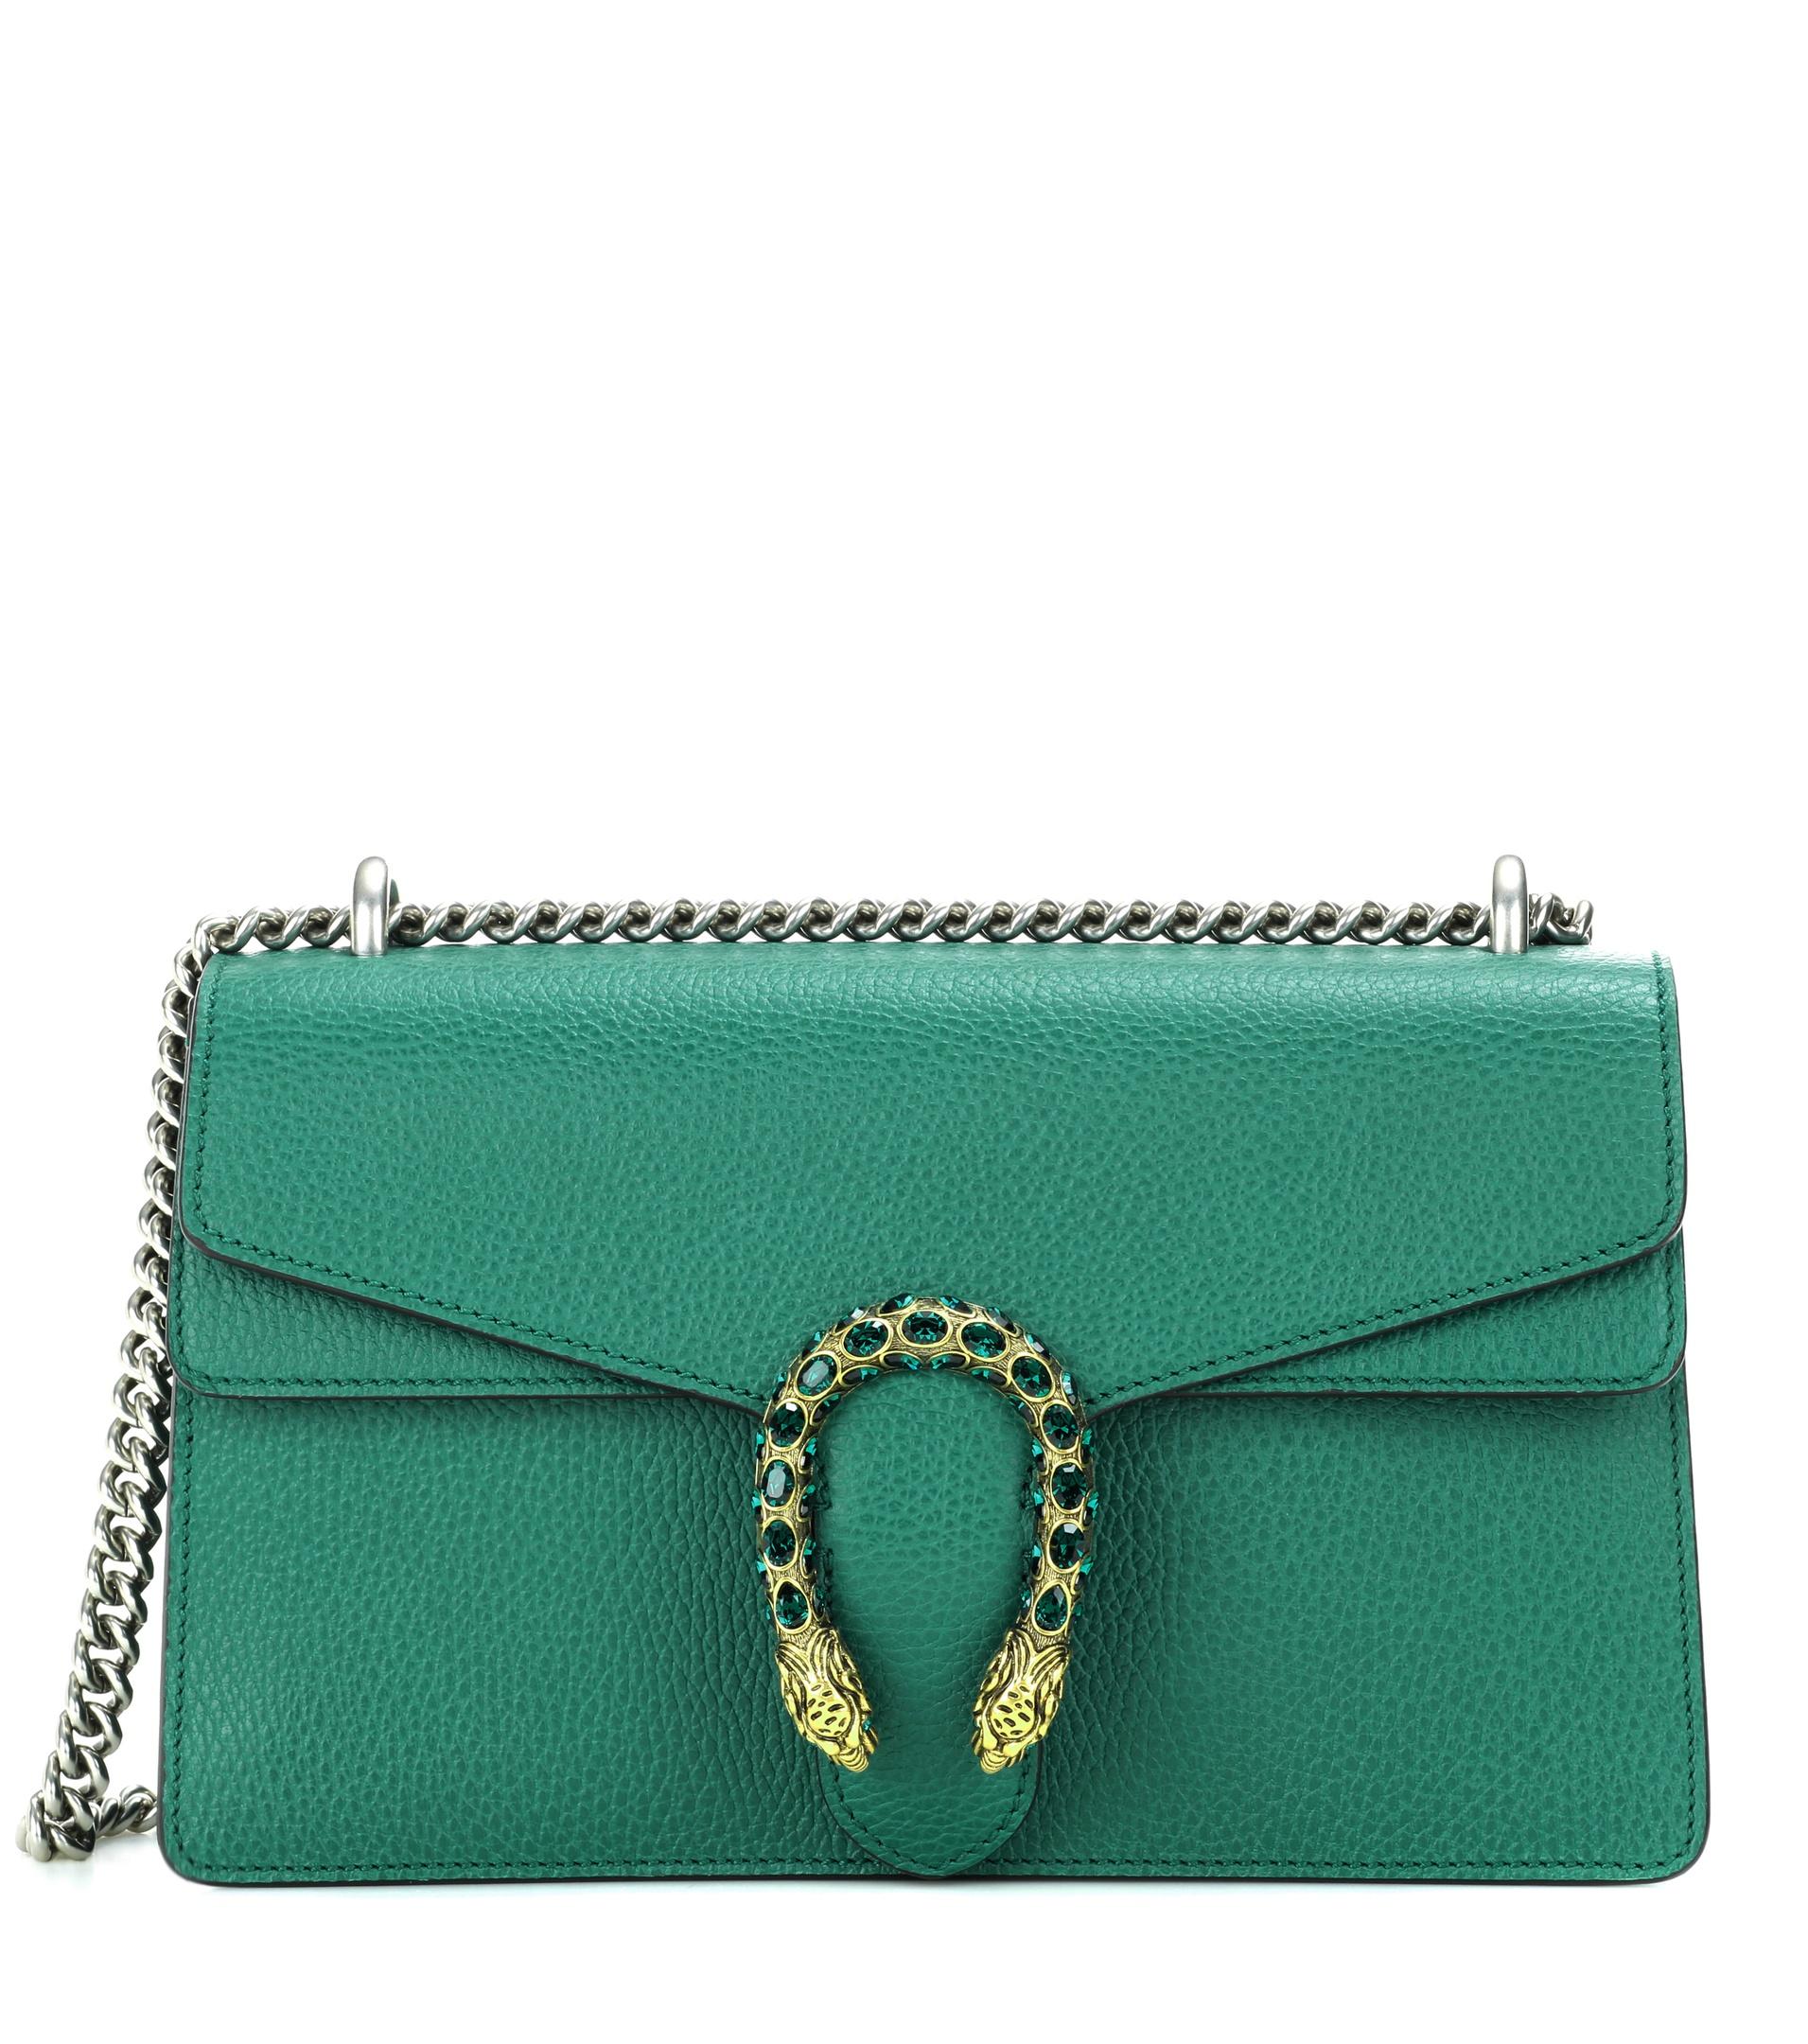 Gucci Dionysus Small Shoulder Bag in Green